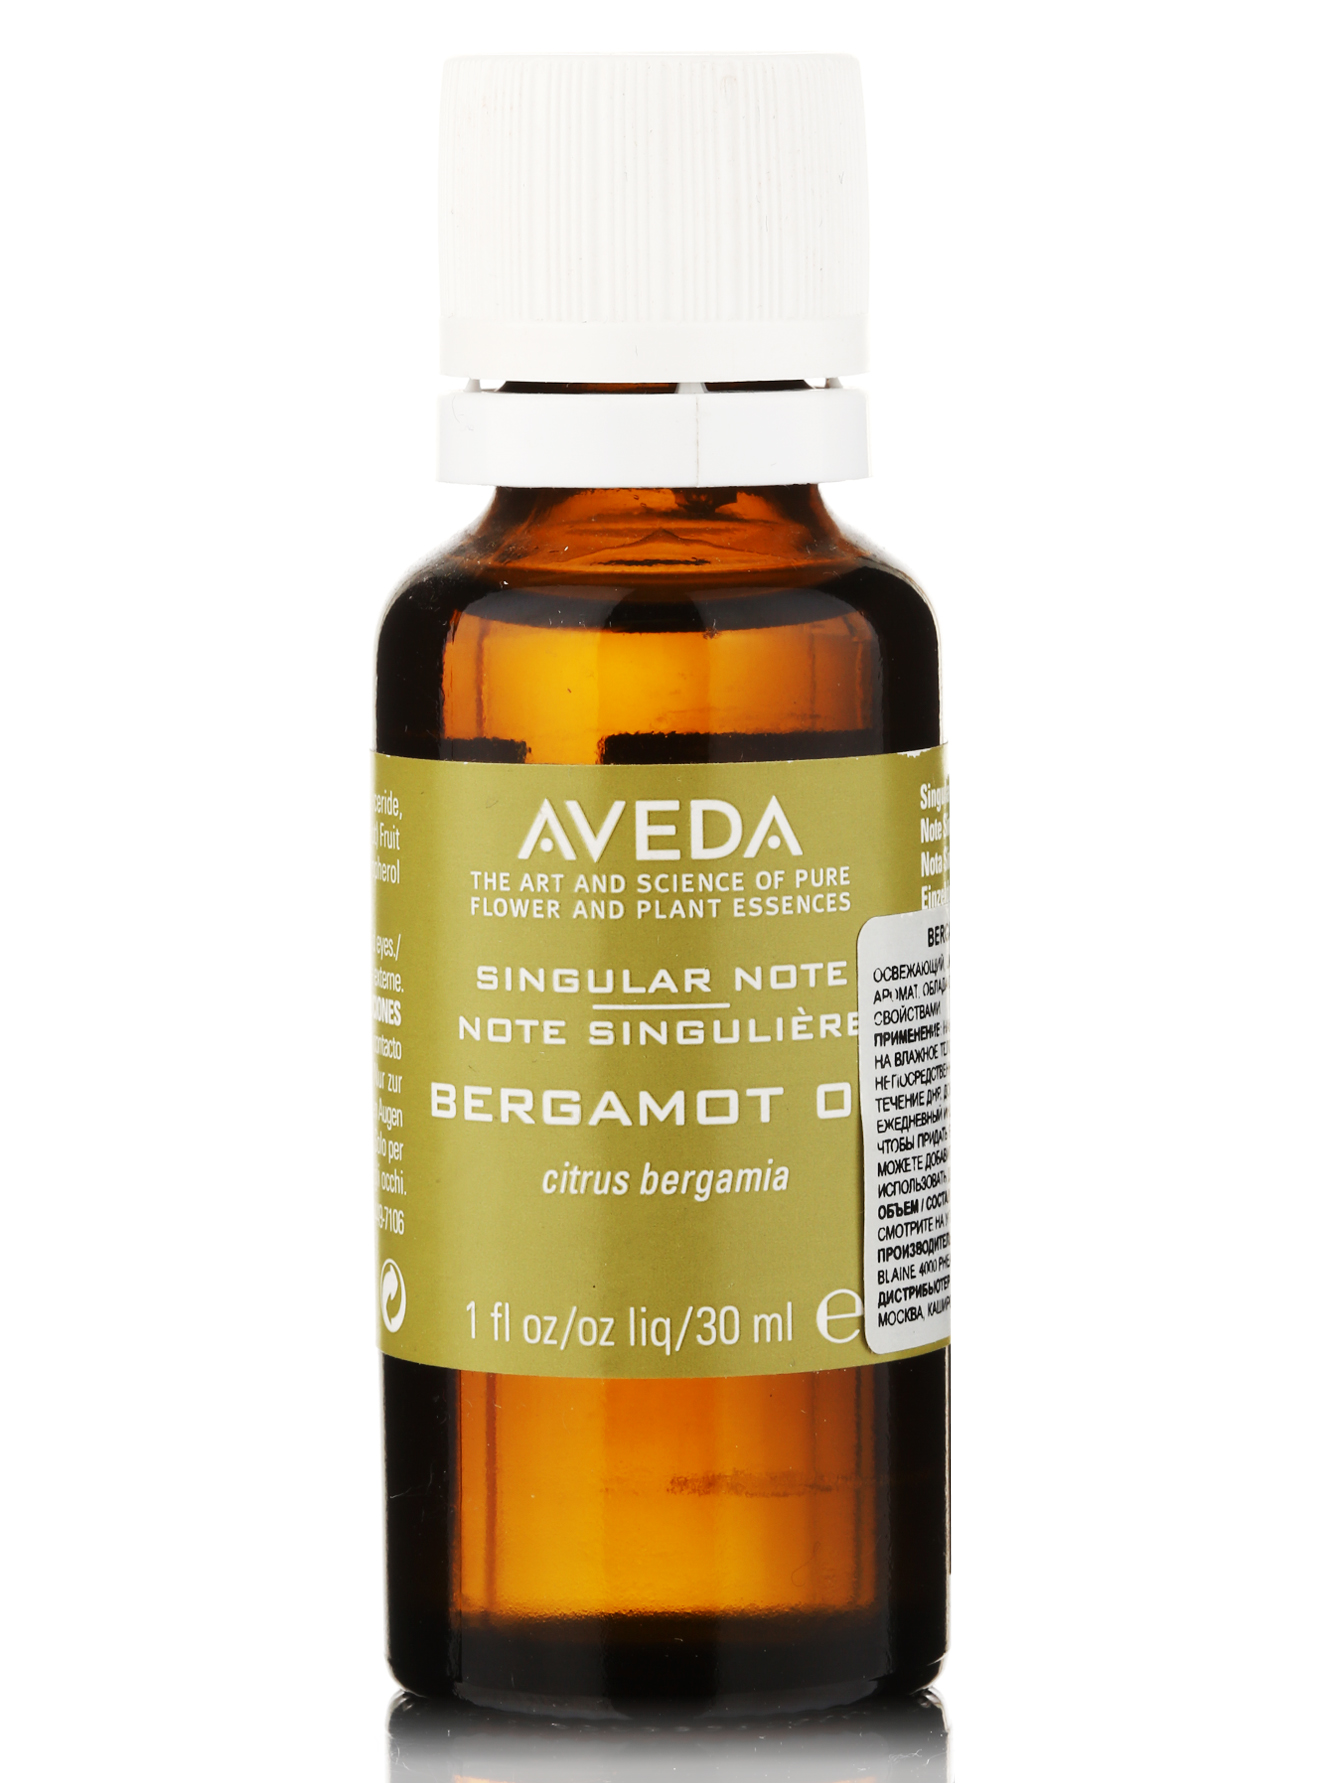 Mасло бергамота ароматическое - Bergamot, 30ml - Общий вид